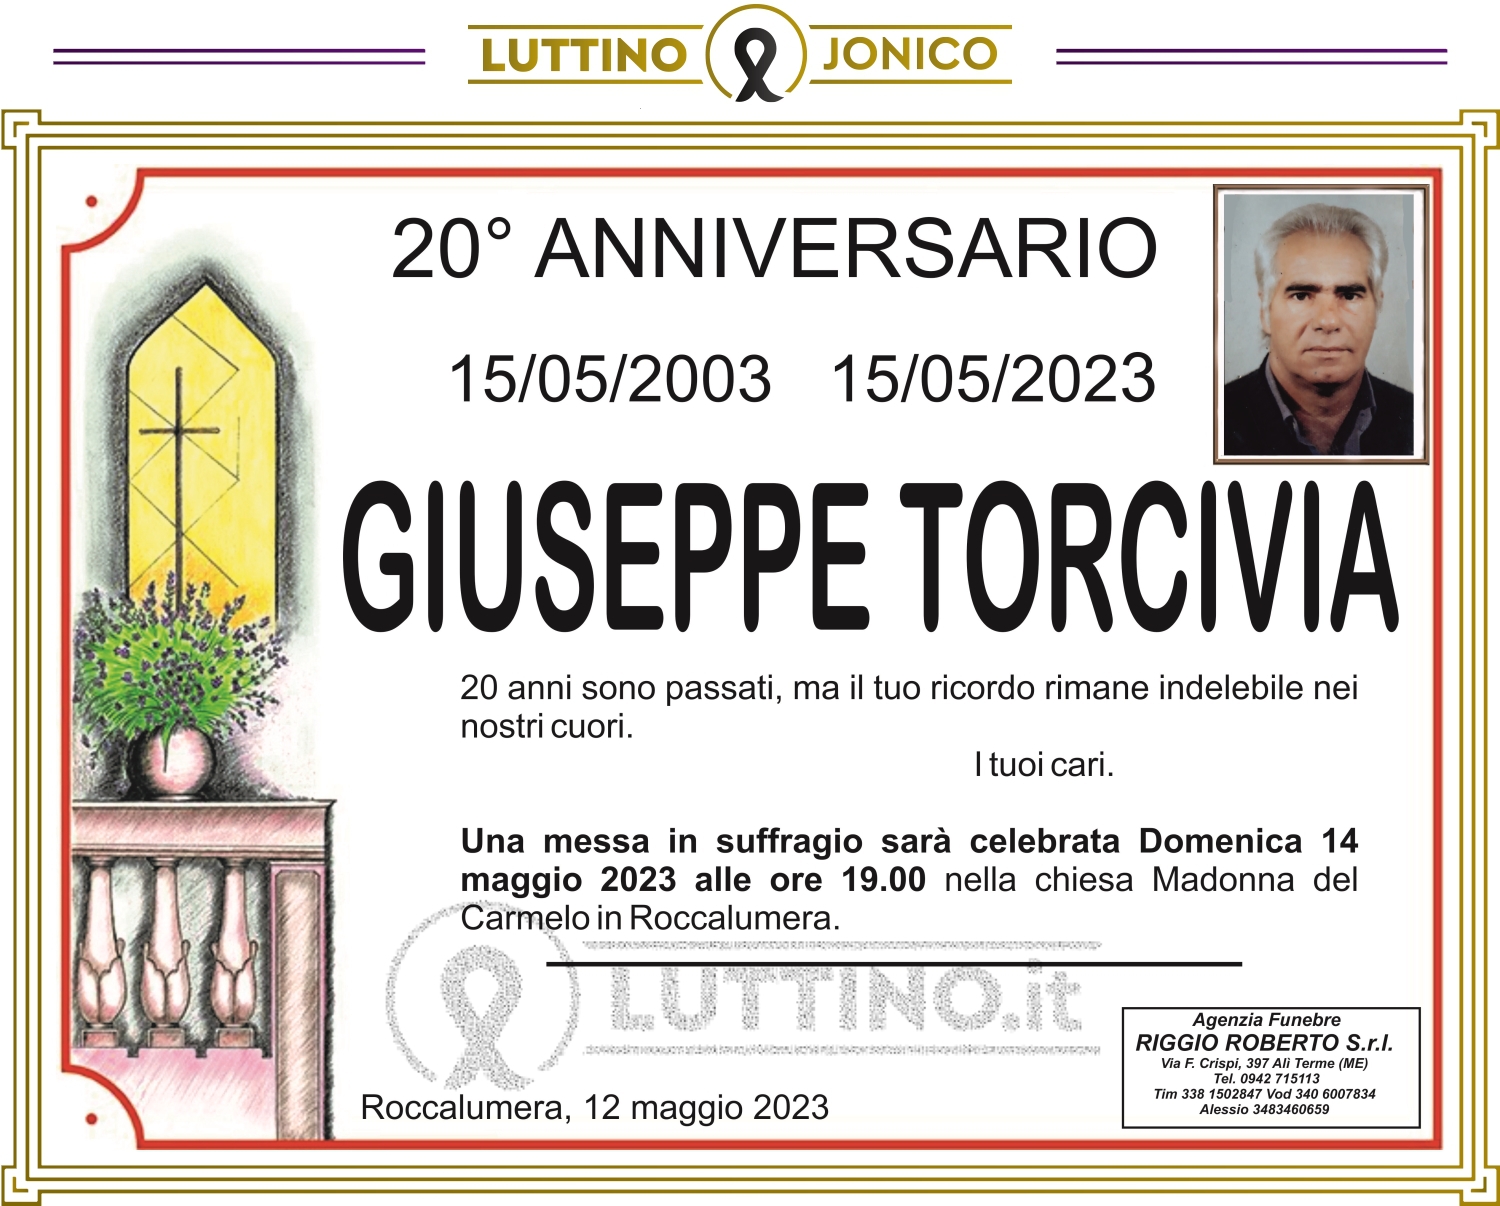 Giuseppe Torcivia